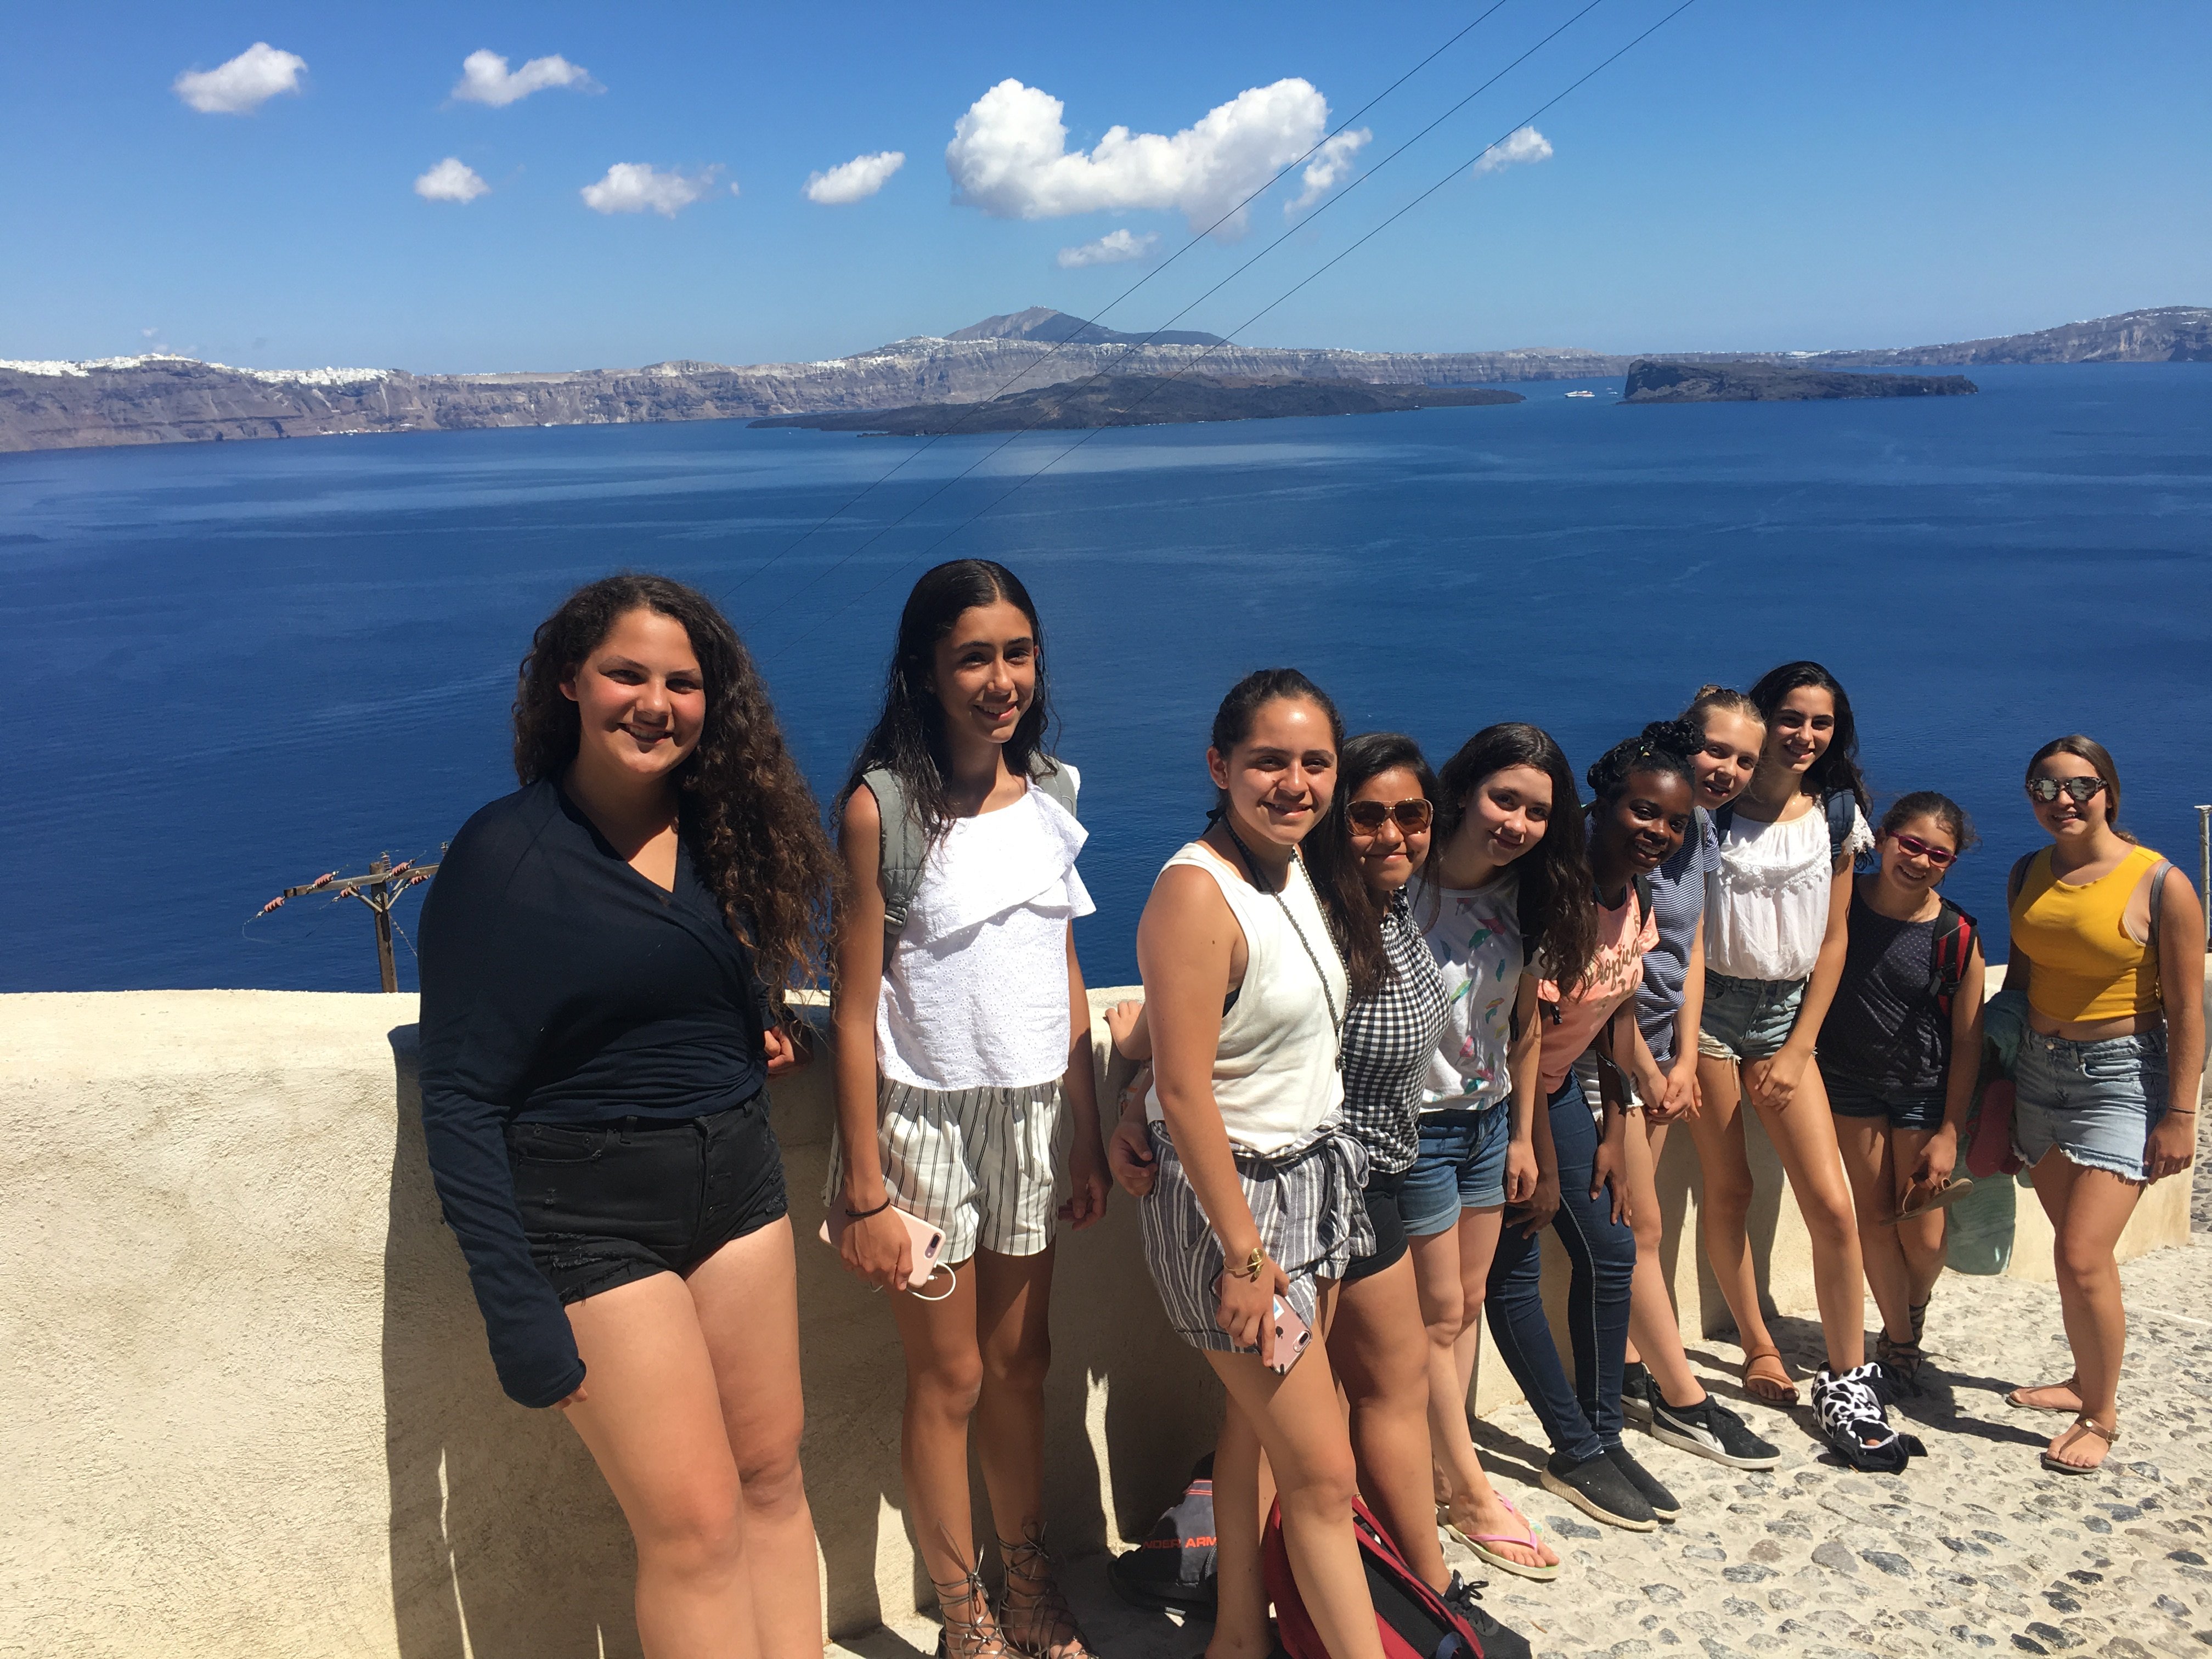 Panorama of the Greek Islands